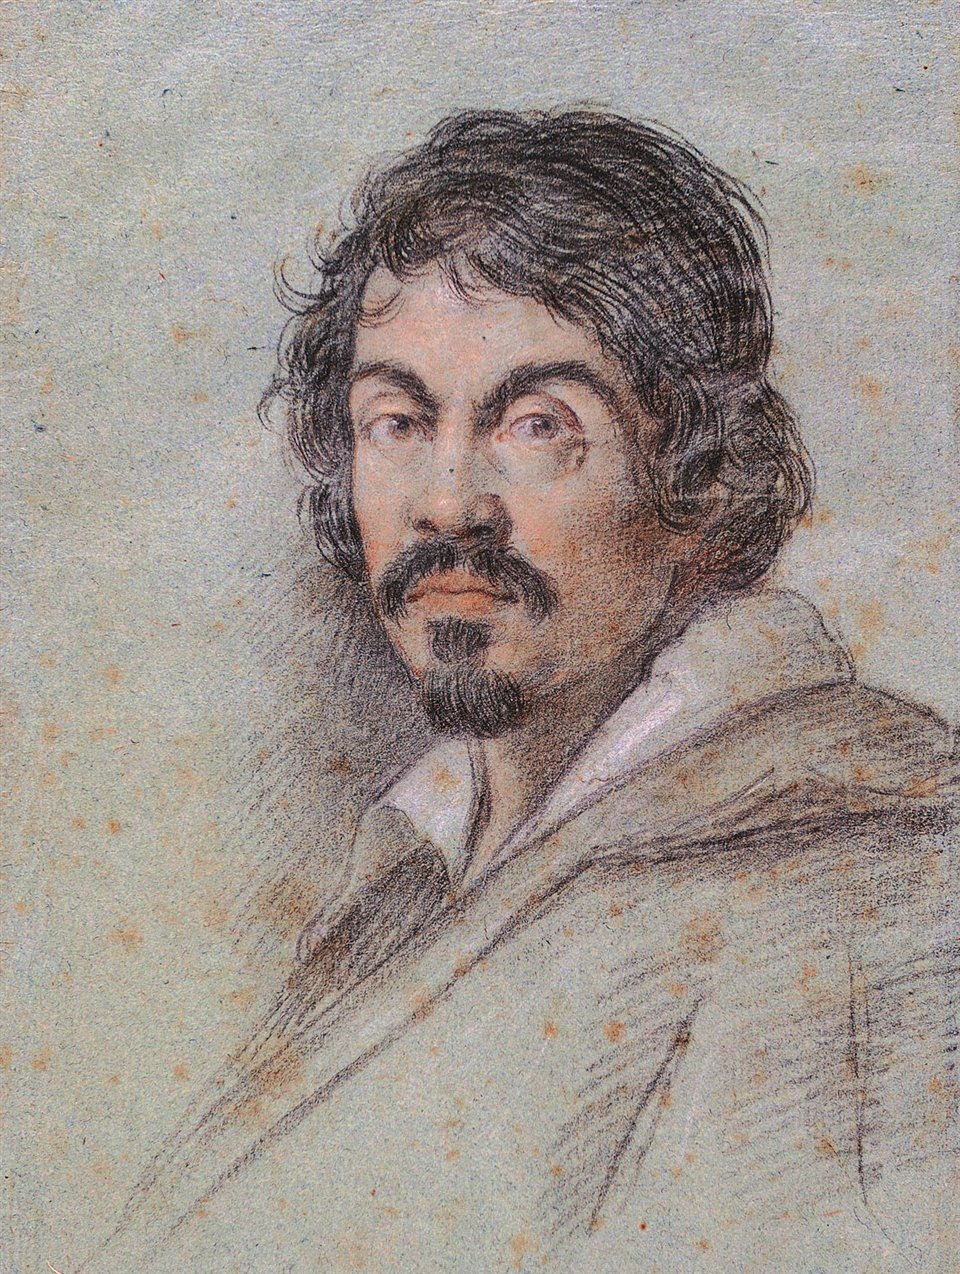 65a83a3b66b33 Caravaggio: Quem Foi O Artista, Obras E Características